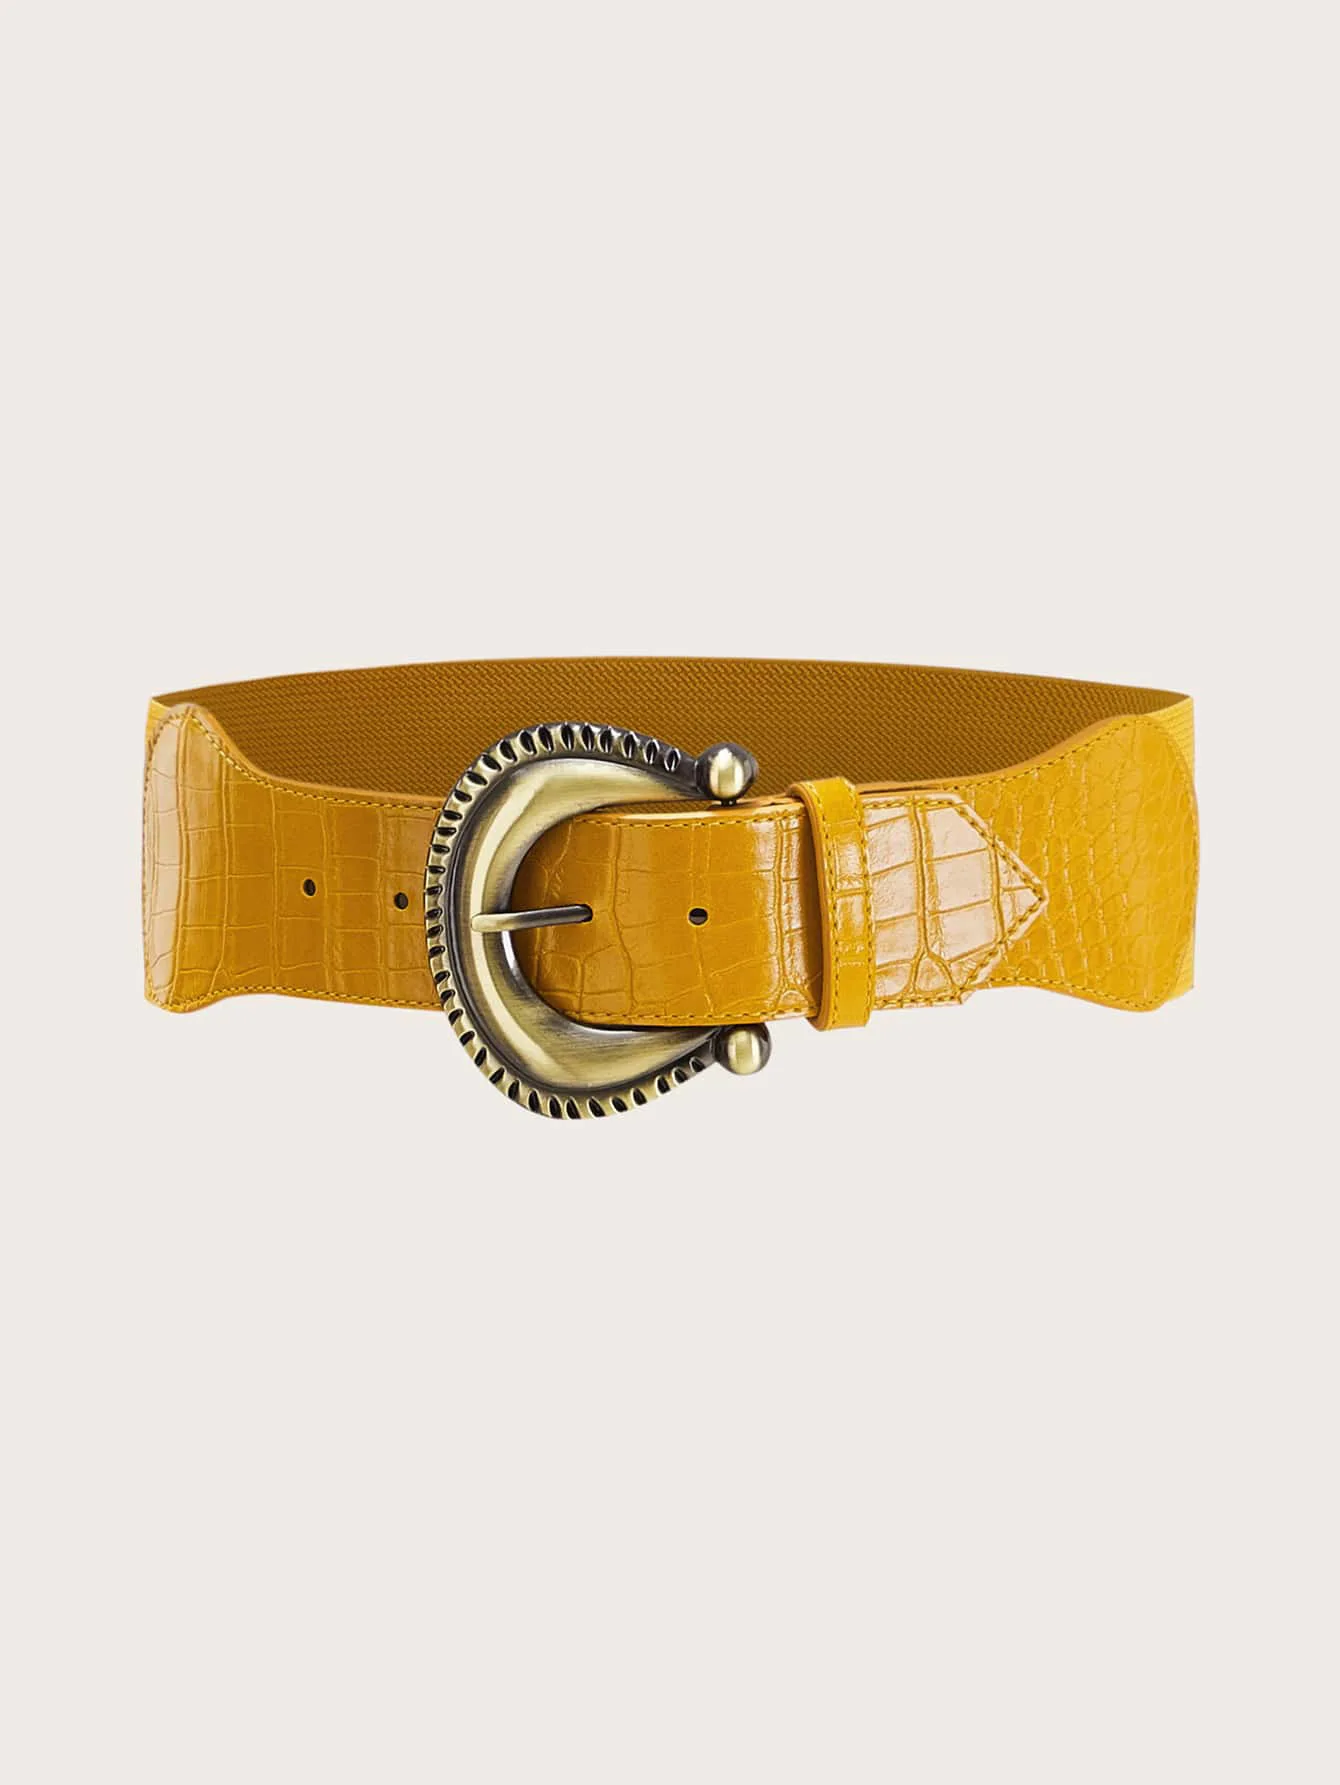 Antique Women Belt Wide PU Leather Corset Waist Belts Elastain Stretchable Dress Decoration Yellow Waistbelt Band